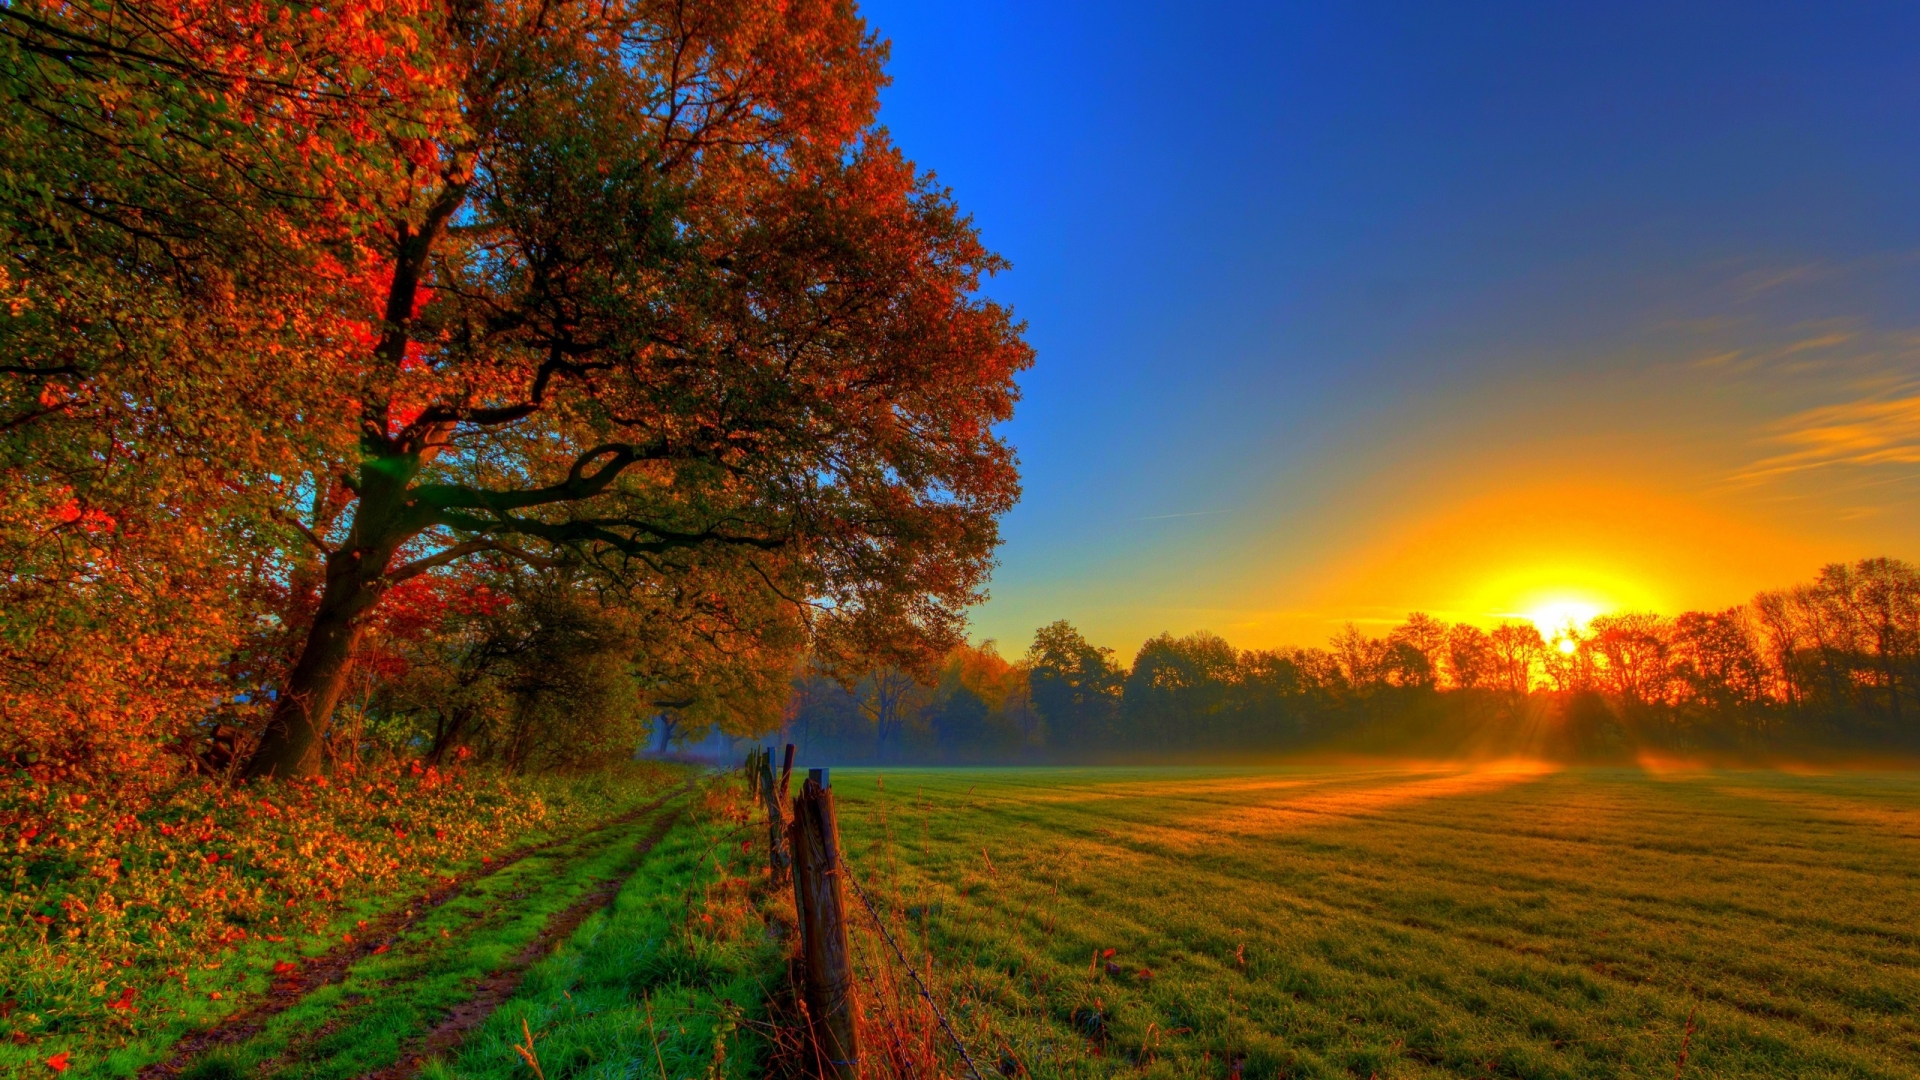 Beautiful Autumn Sunset for 1920 x 1080 HDTV 1080p resolution